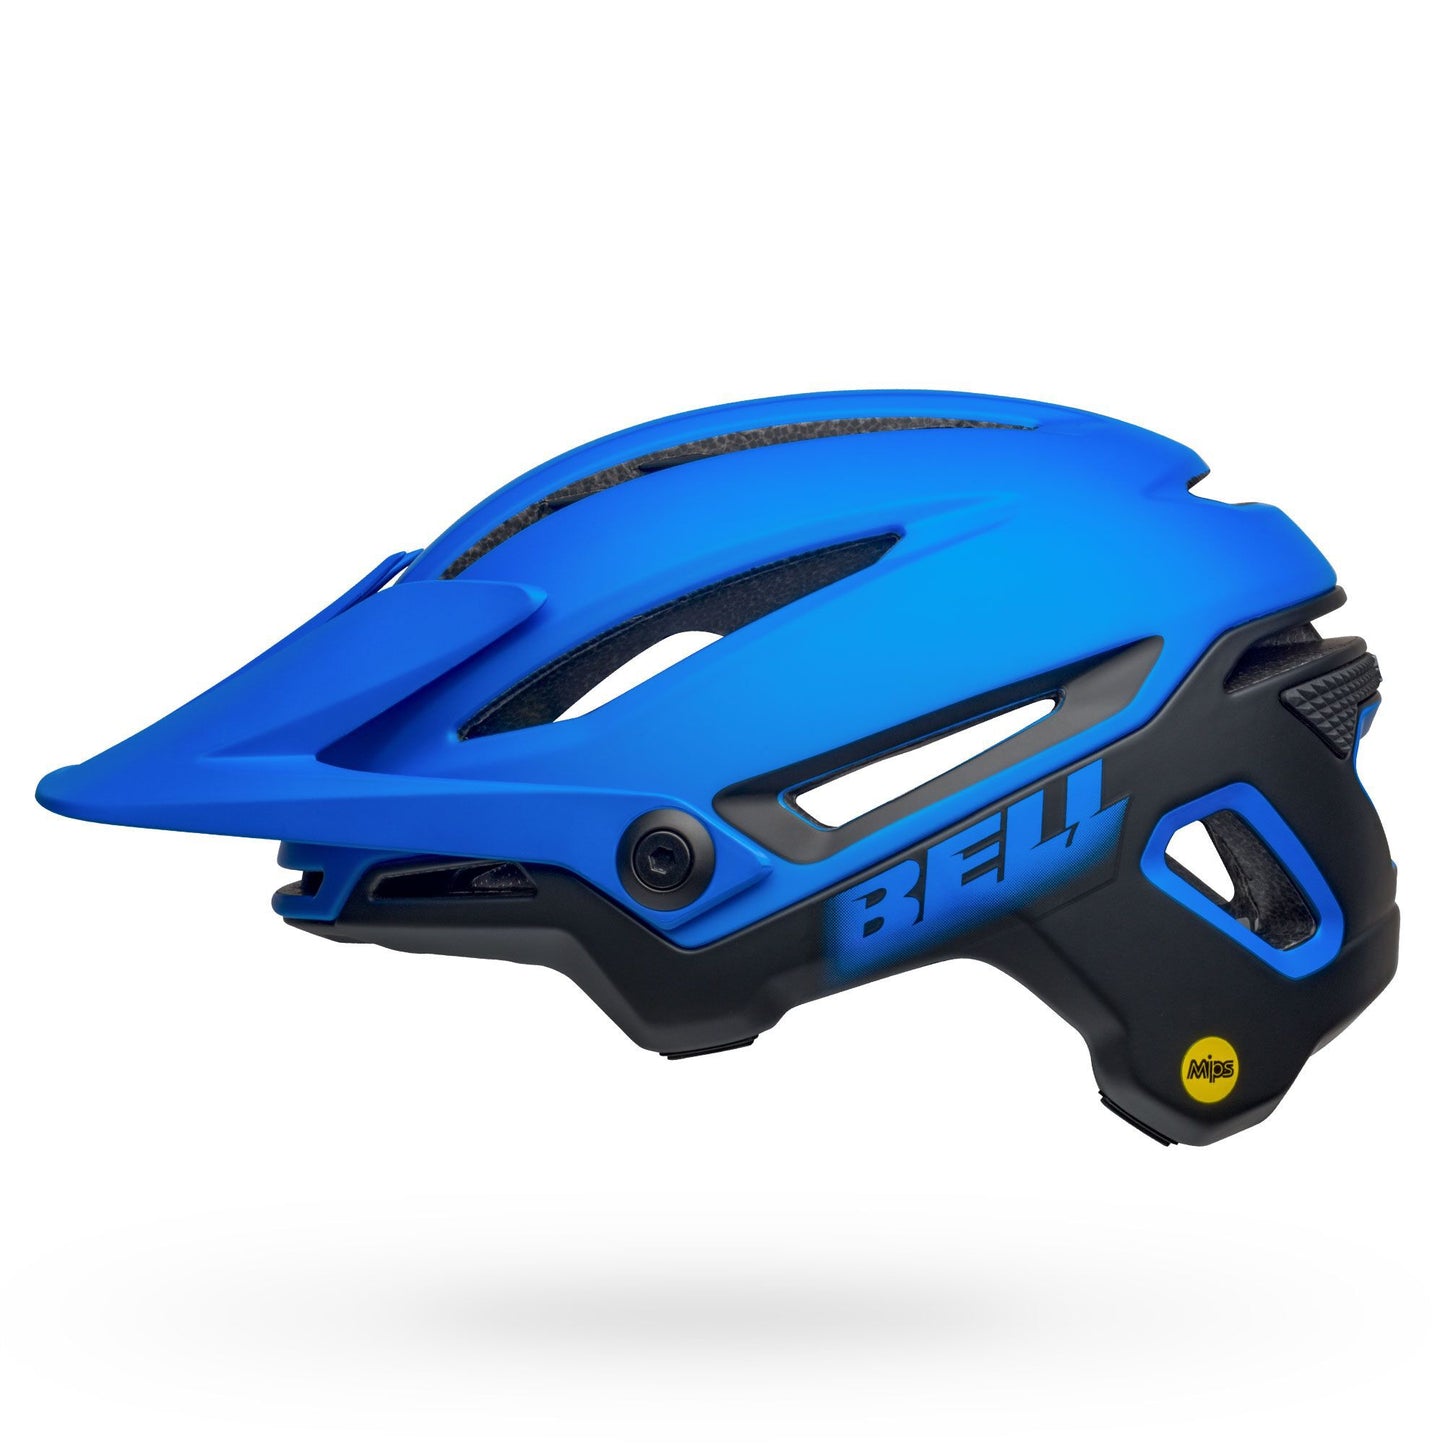 Bell Sixer MIPS Helmet Matte Blue Black Bike Helmets